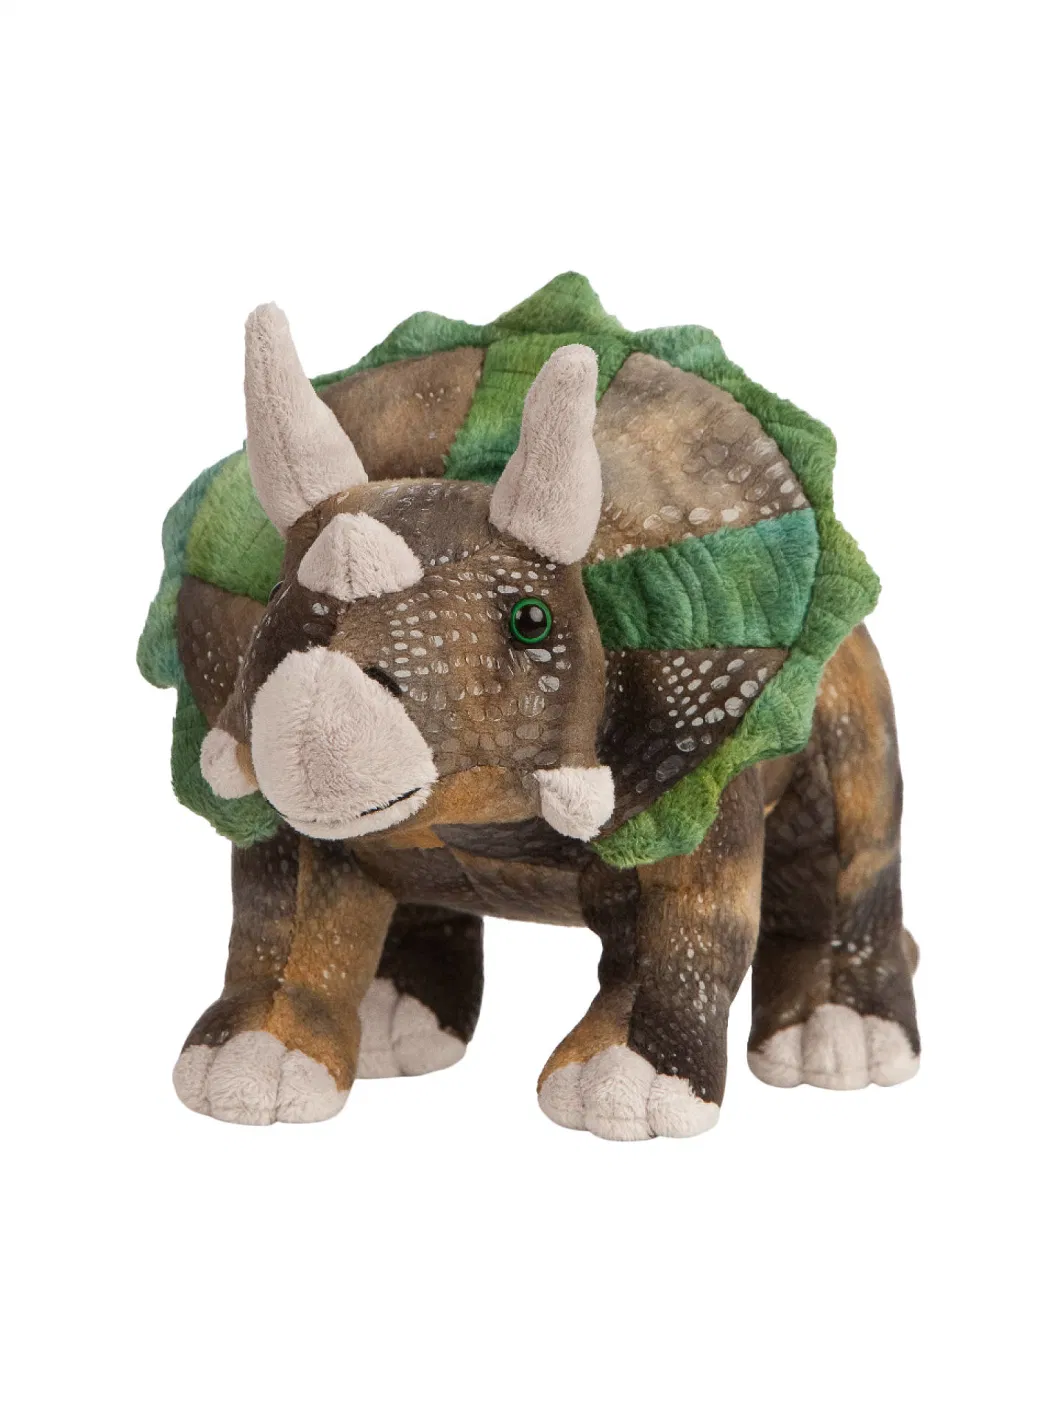 OEM Cute Spike Simulation Triceratops Stuffed Toy Dinosaur